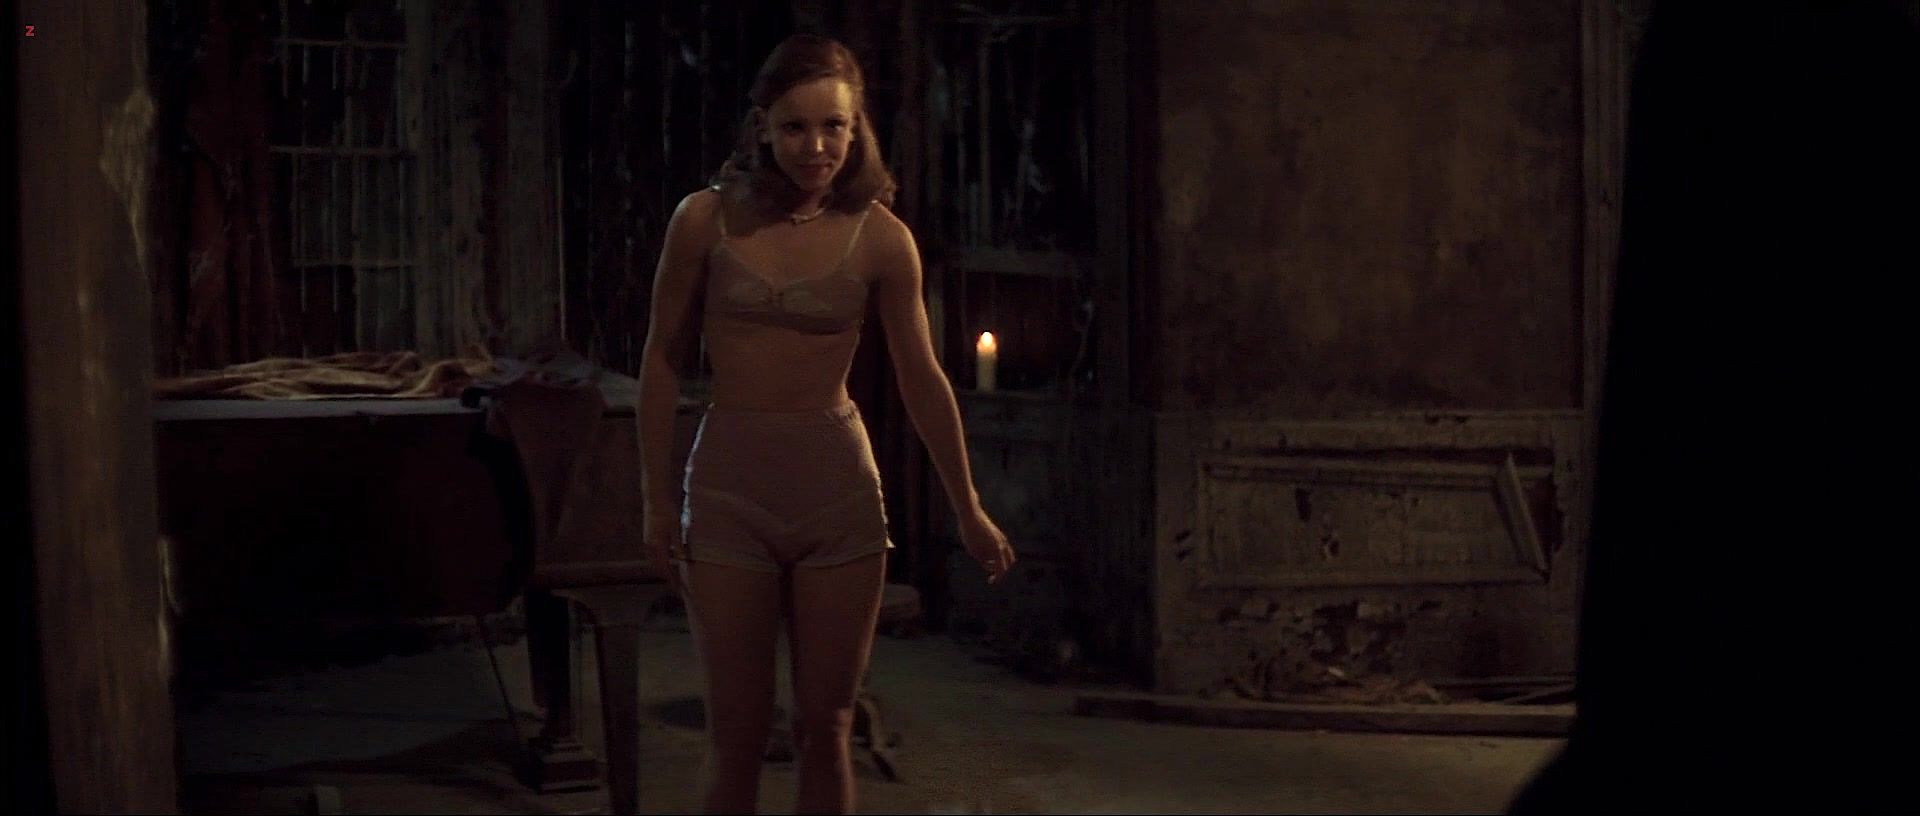 Wild Topless actress Rachel McAdams nude - The Notebook (2004) Brasileiro - 2